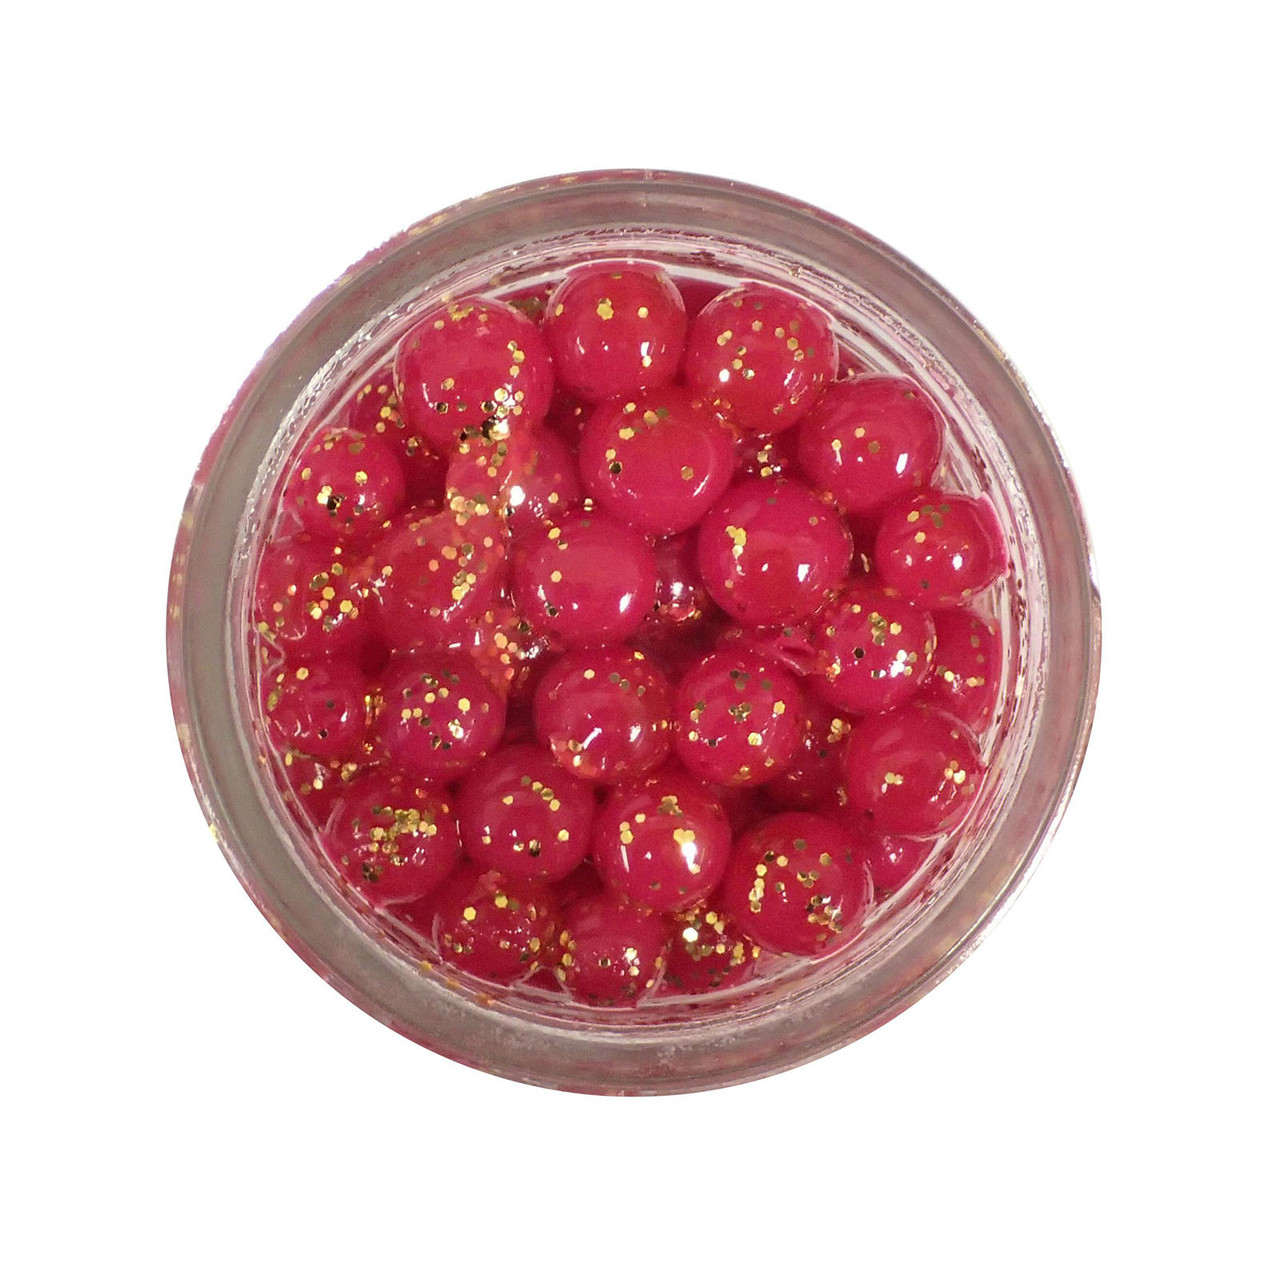 Pautzke's Bait Green Label Balls O' Fire Salmon Eggs - 1 oz jar